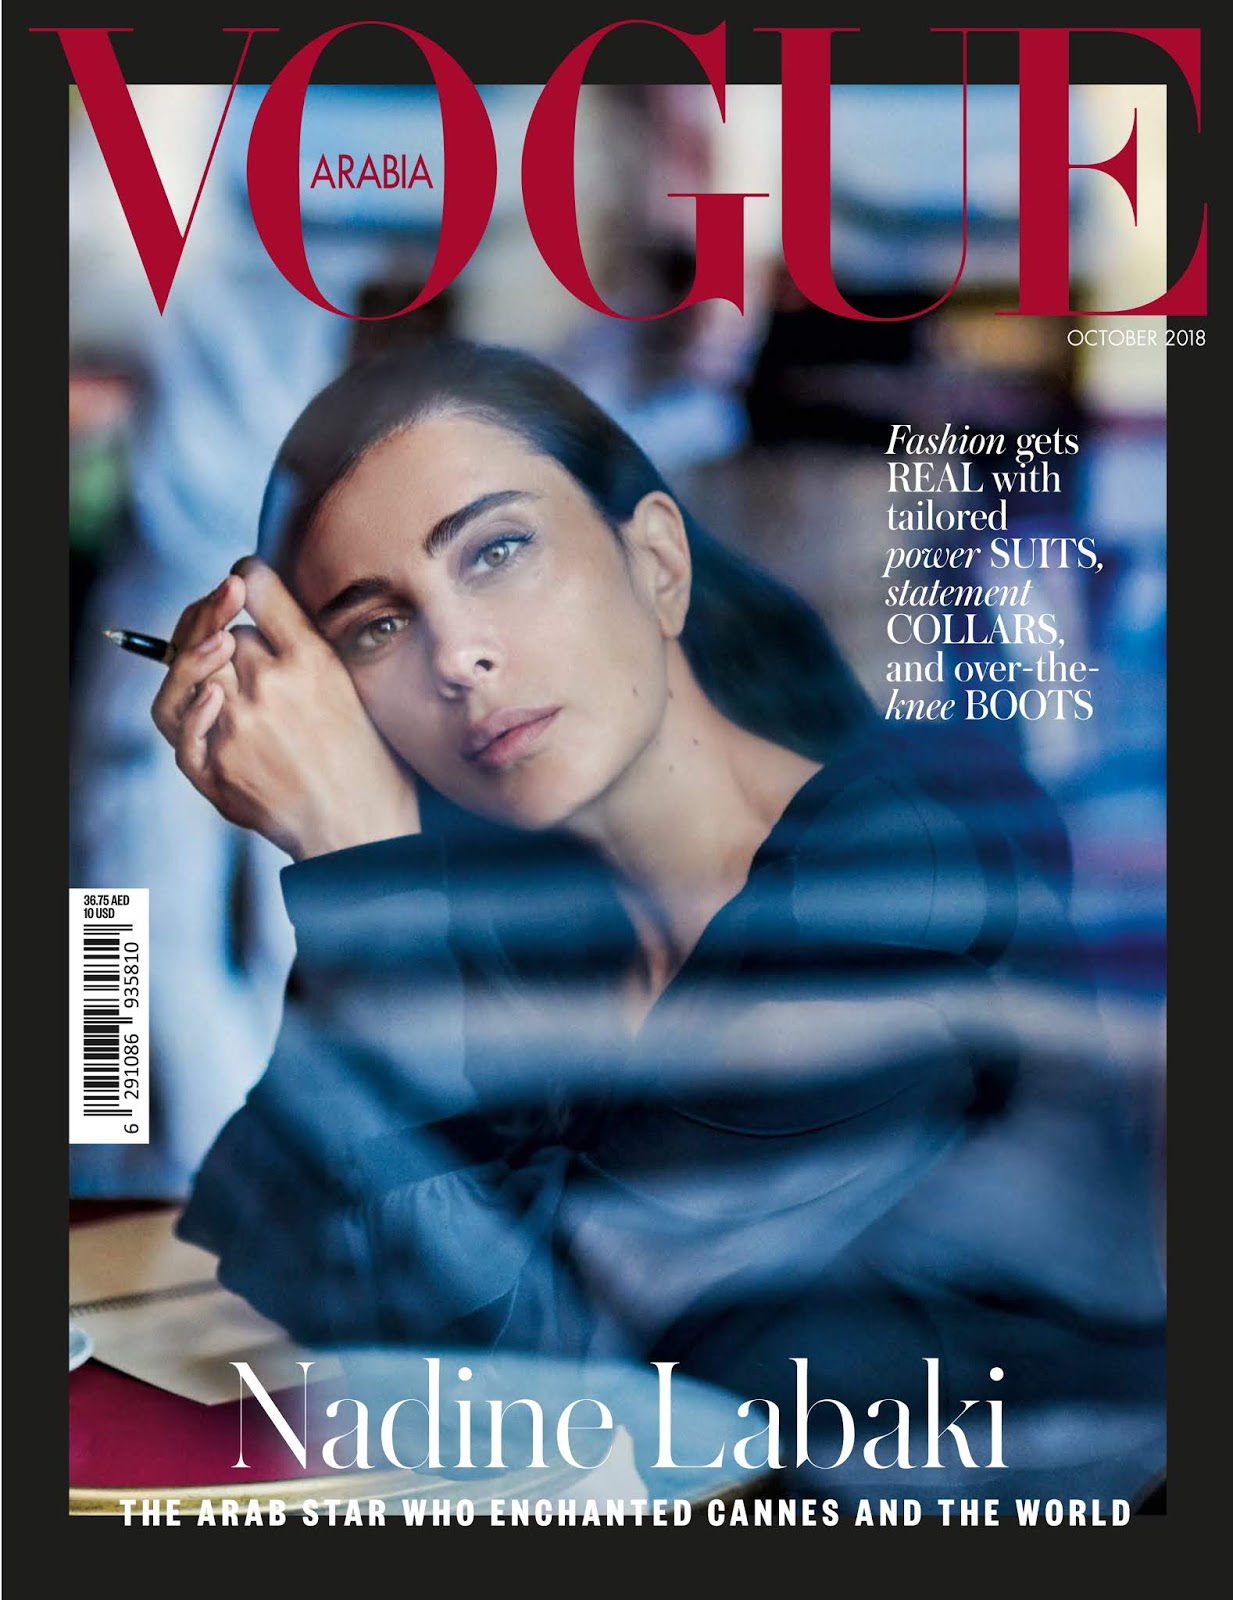 Nadine Labaki by Drew Jarrett for Vogue Arabia Oct 2018 (2).jpg